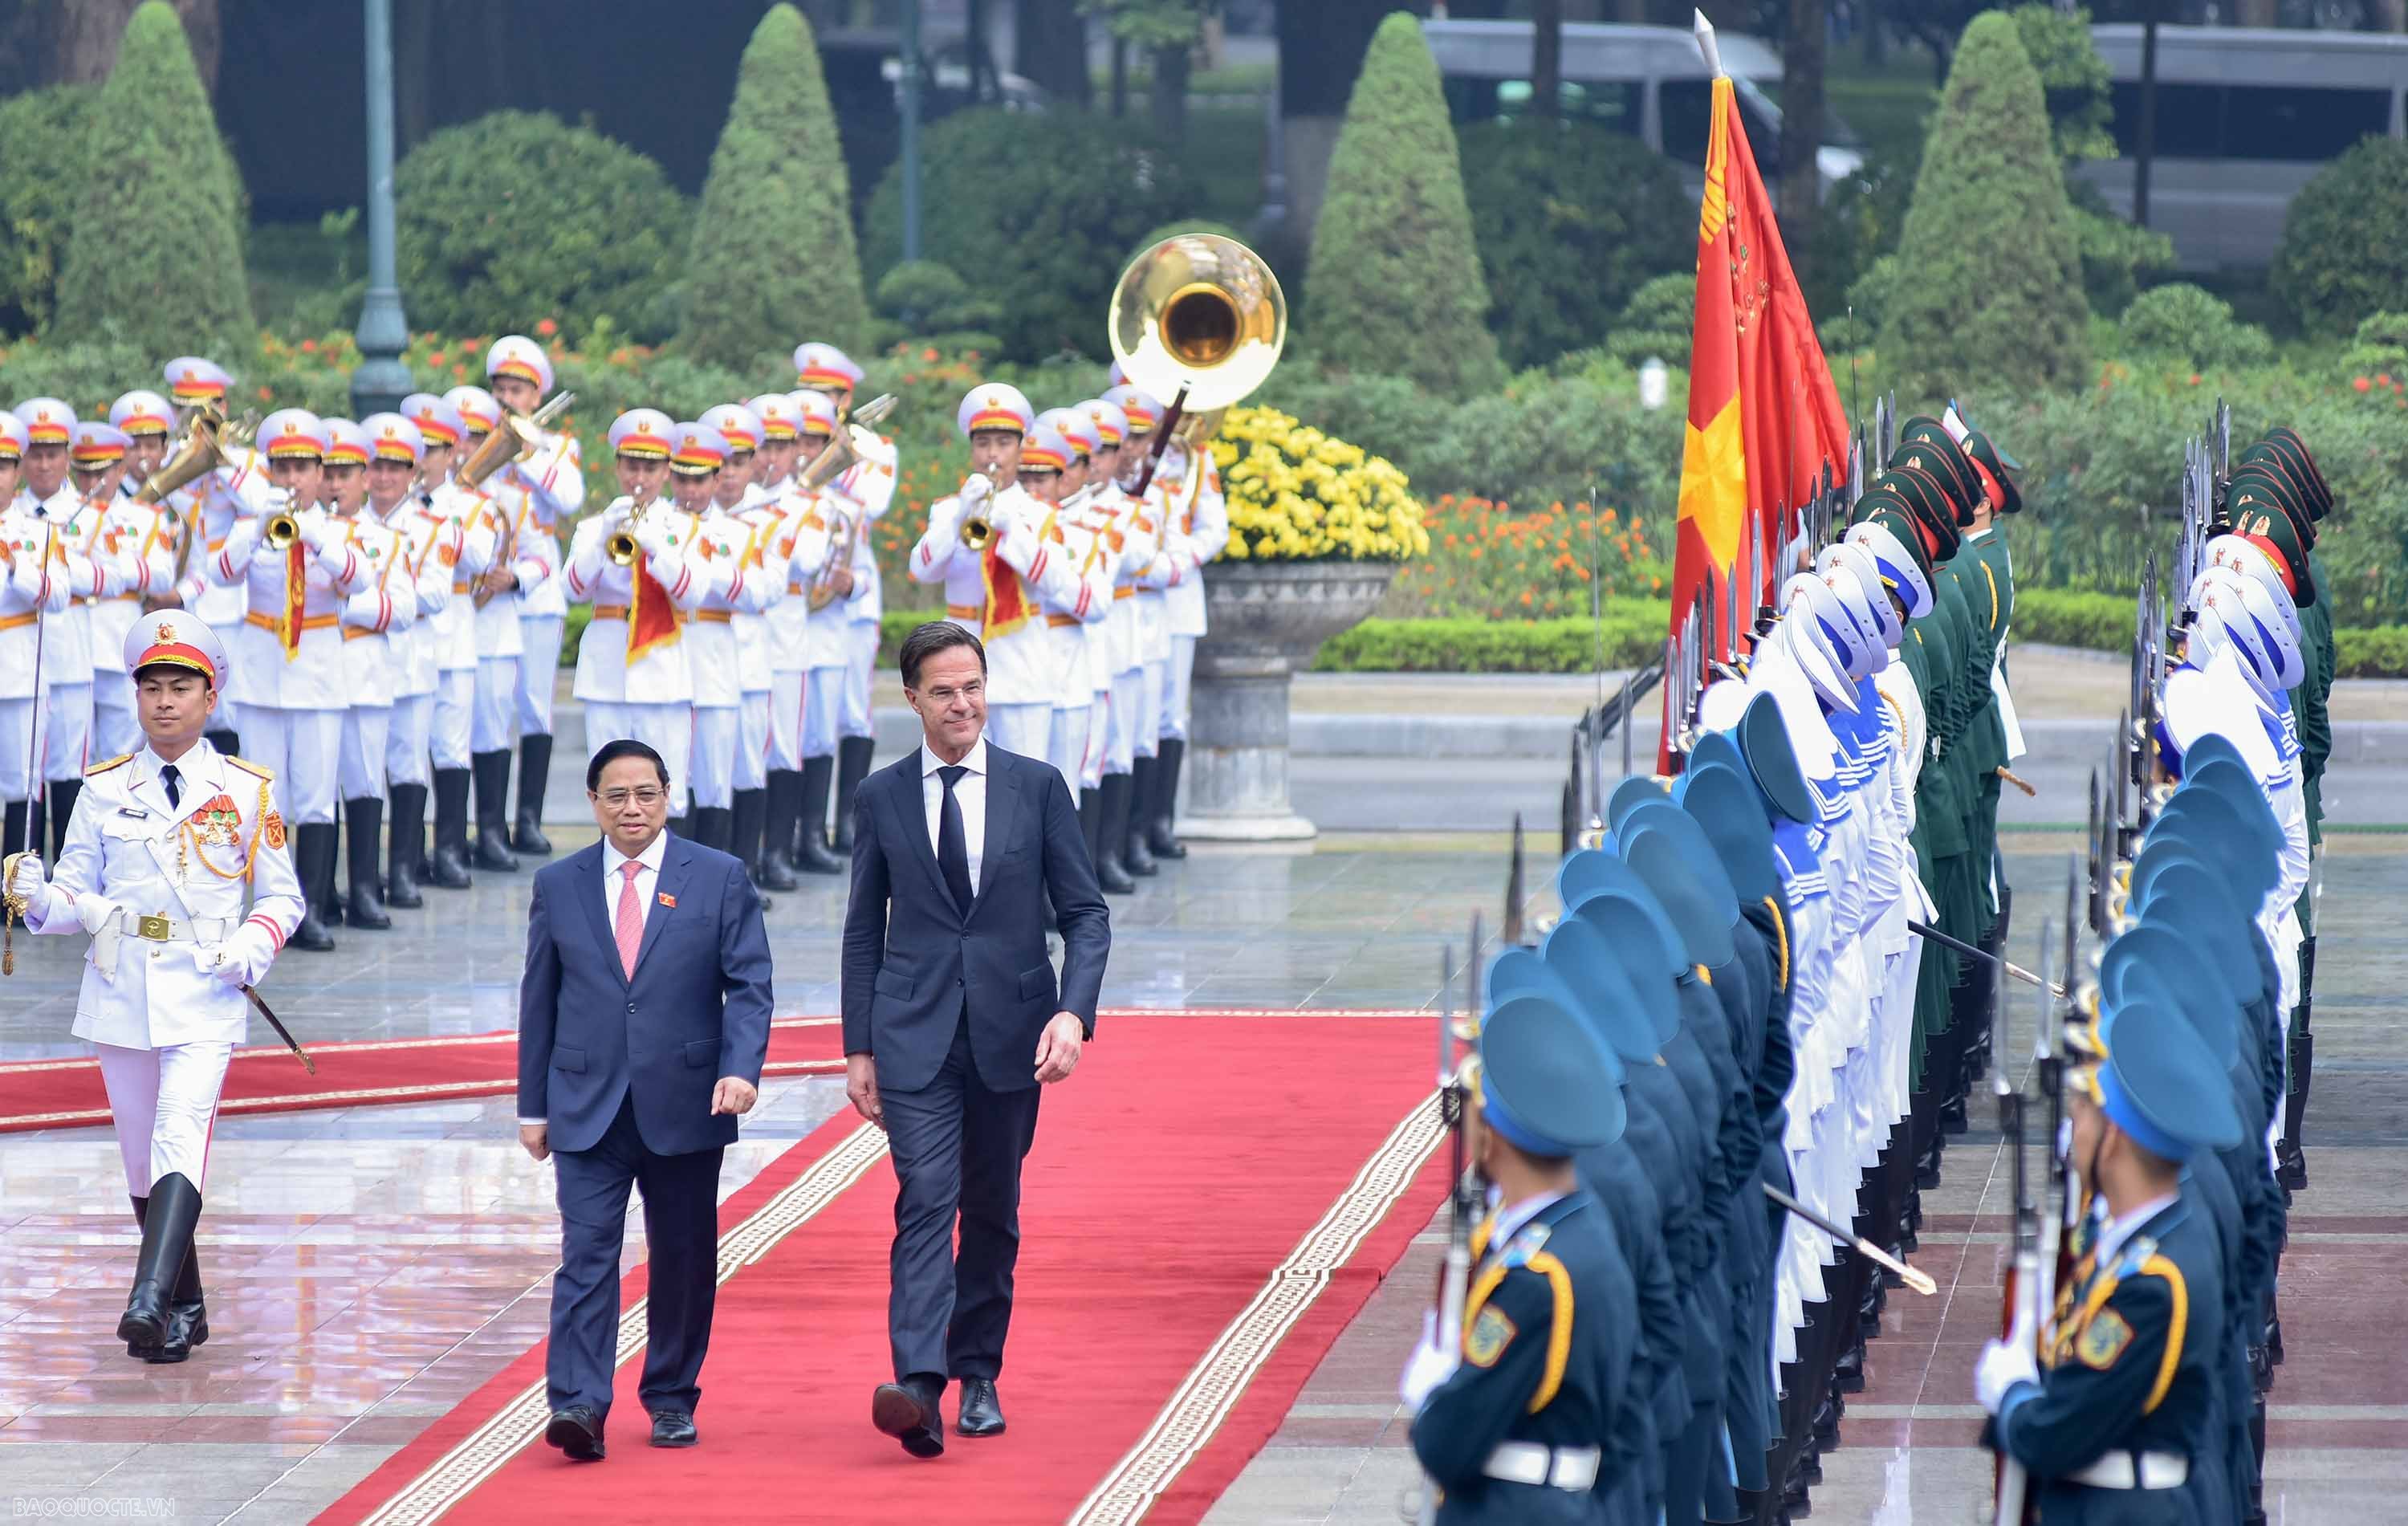 Dutch Prime Minister's visit to Vietnam: A puzzle piece for a complete circle